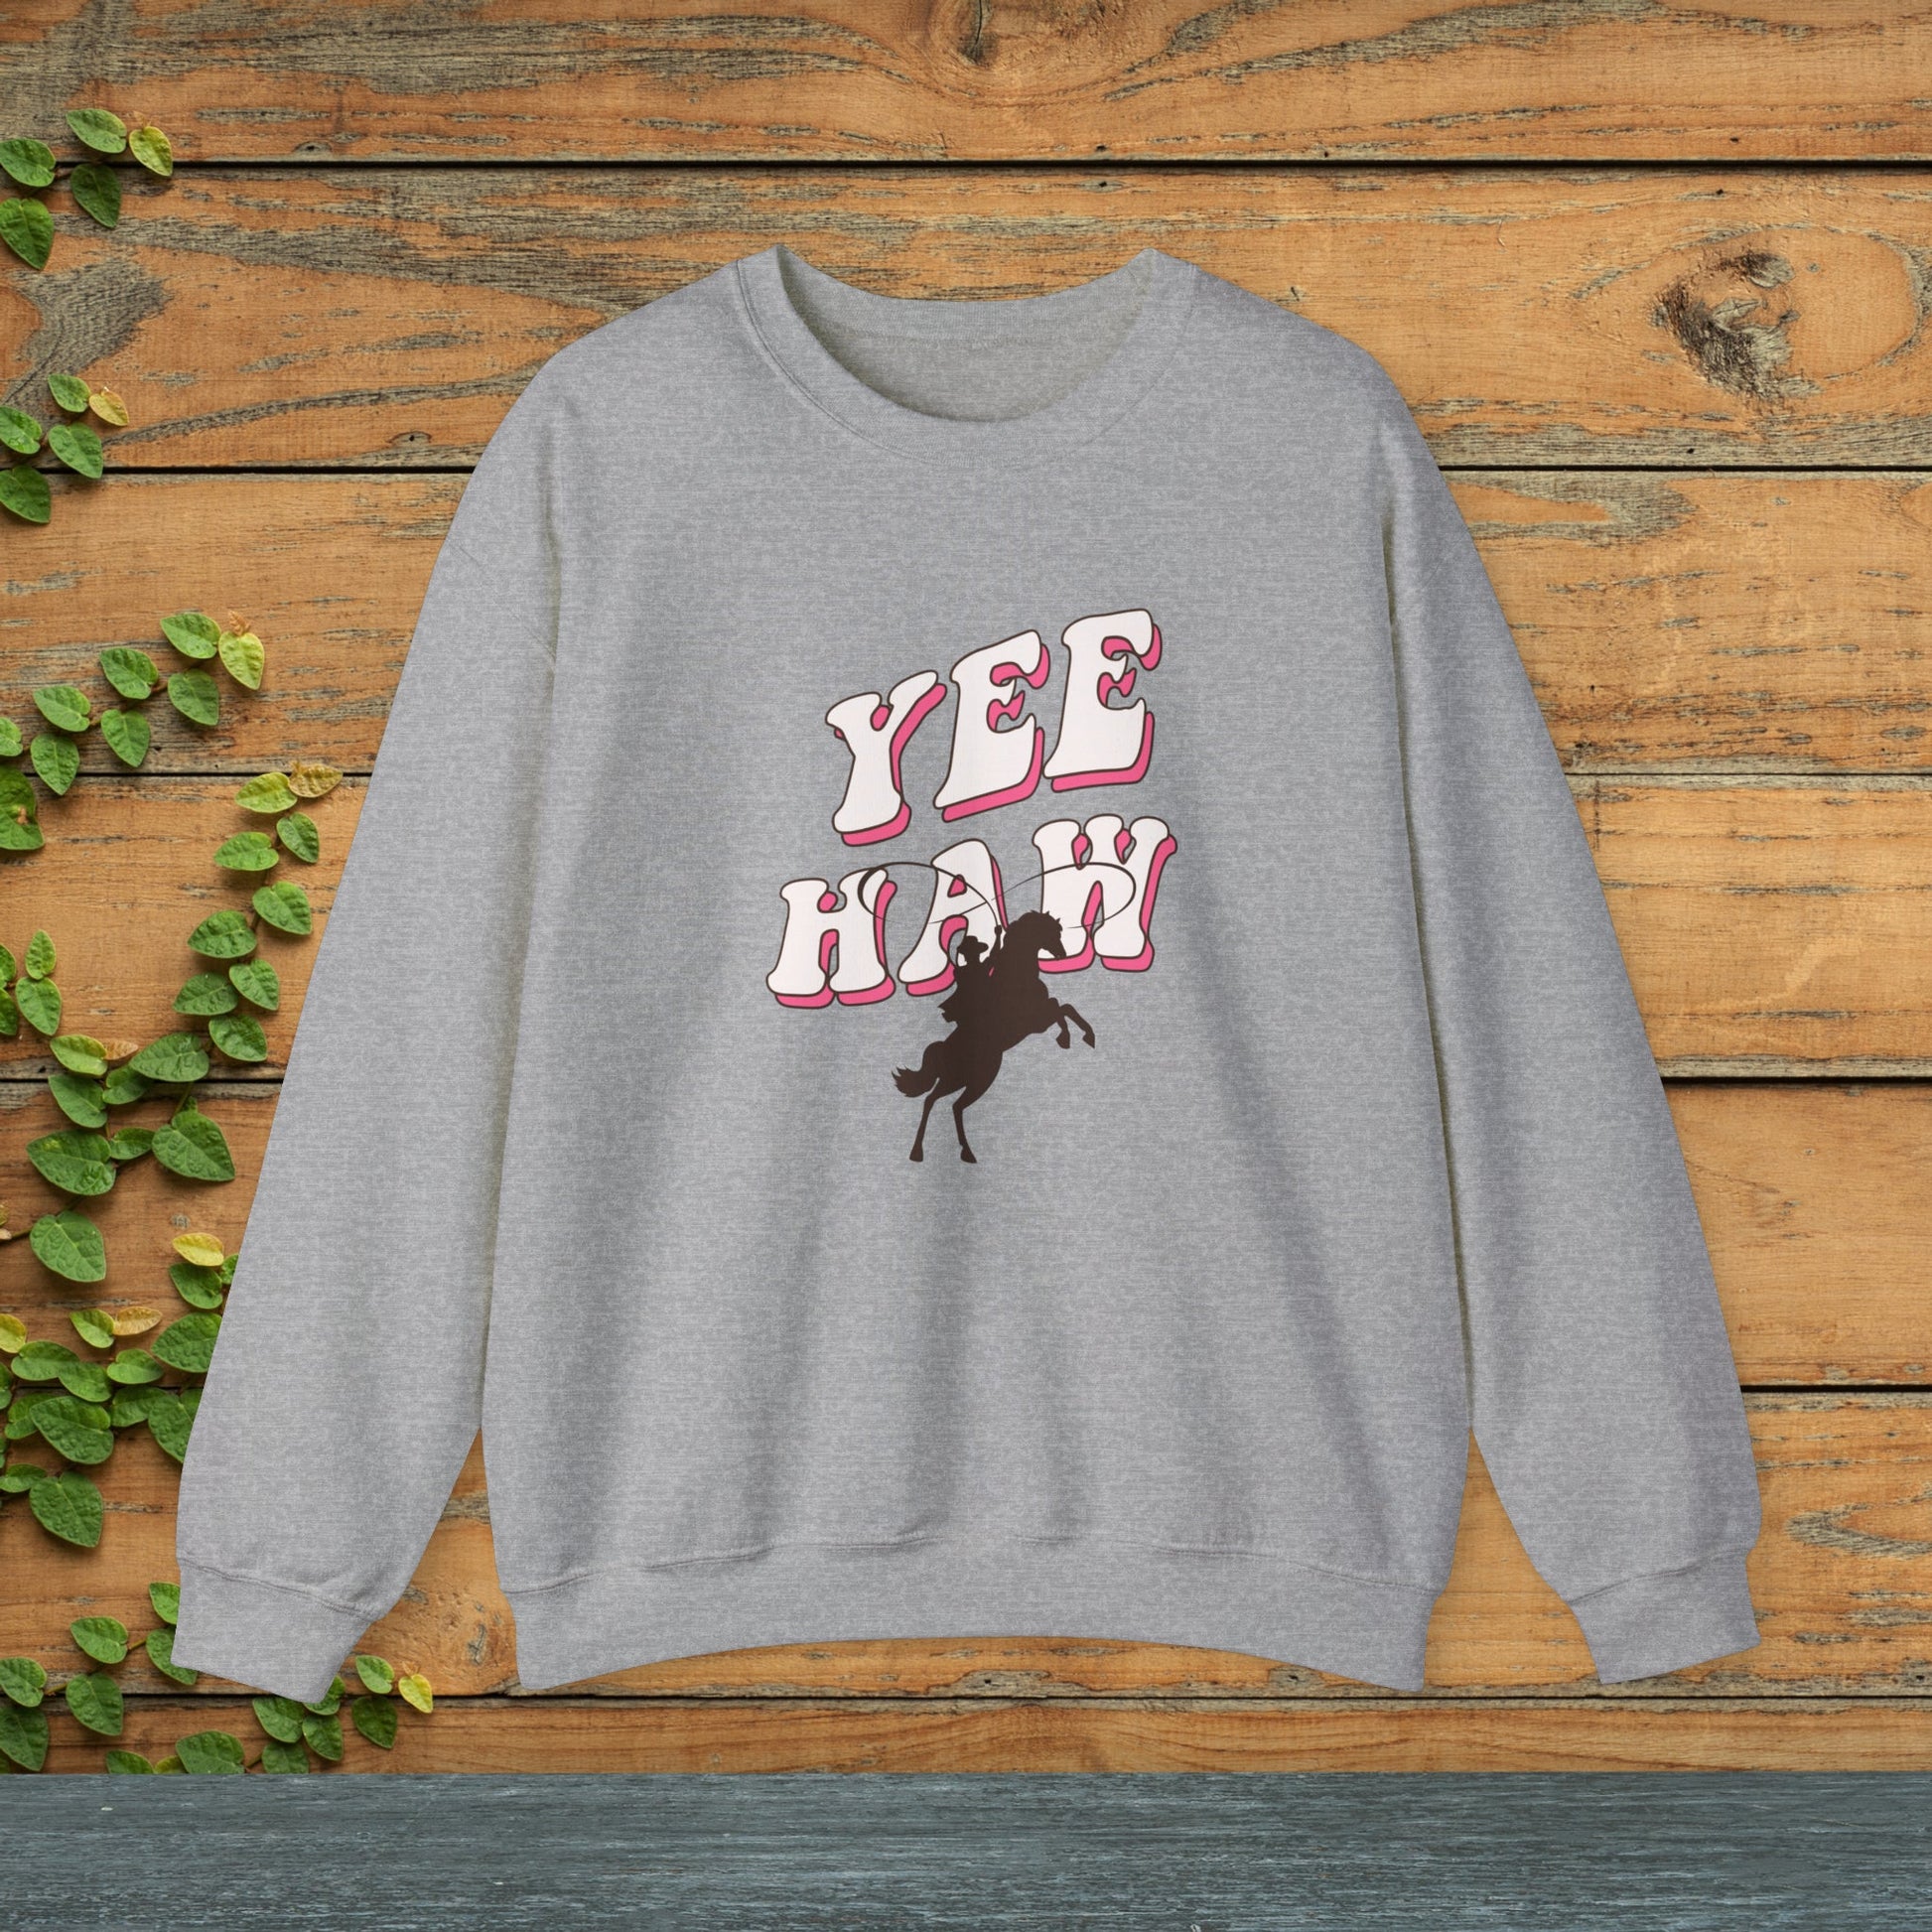 Retro Rodeo Sweatshirt, Western Graphic Sweatshirt, Cowgirl Sweater, Western Rodeo Queen, Hot Pink Cowgirl Shirt, Rodeo Shirt, Yee Haw - FlooredByArt